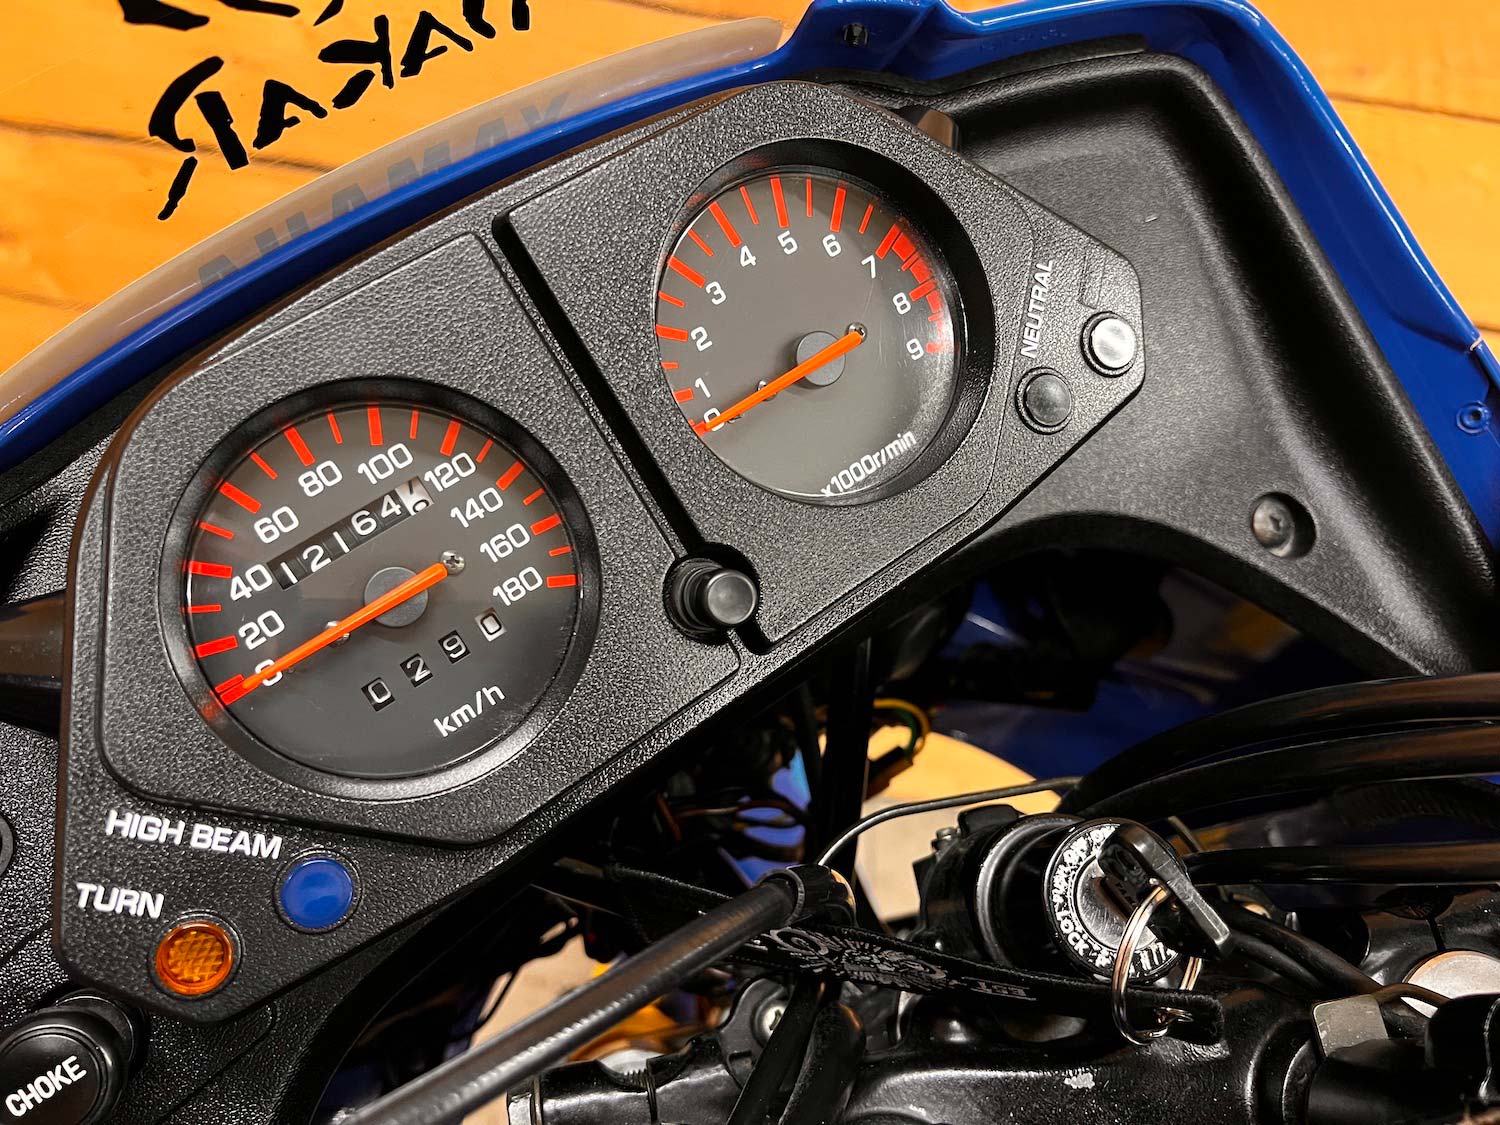 Yamaha_xt600z_Cezanne_classic_motorcycle_5-158.jpg